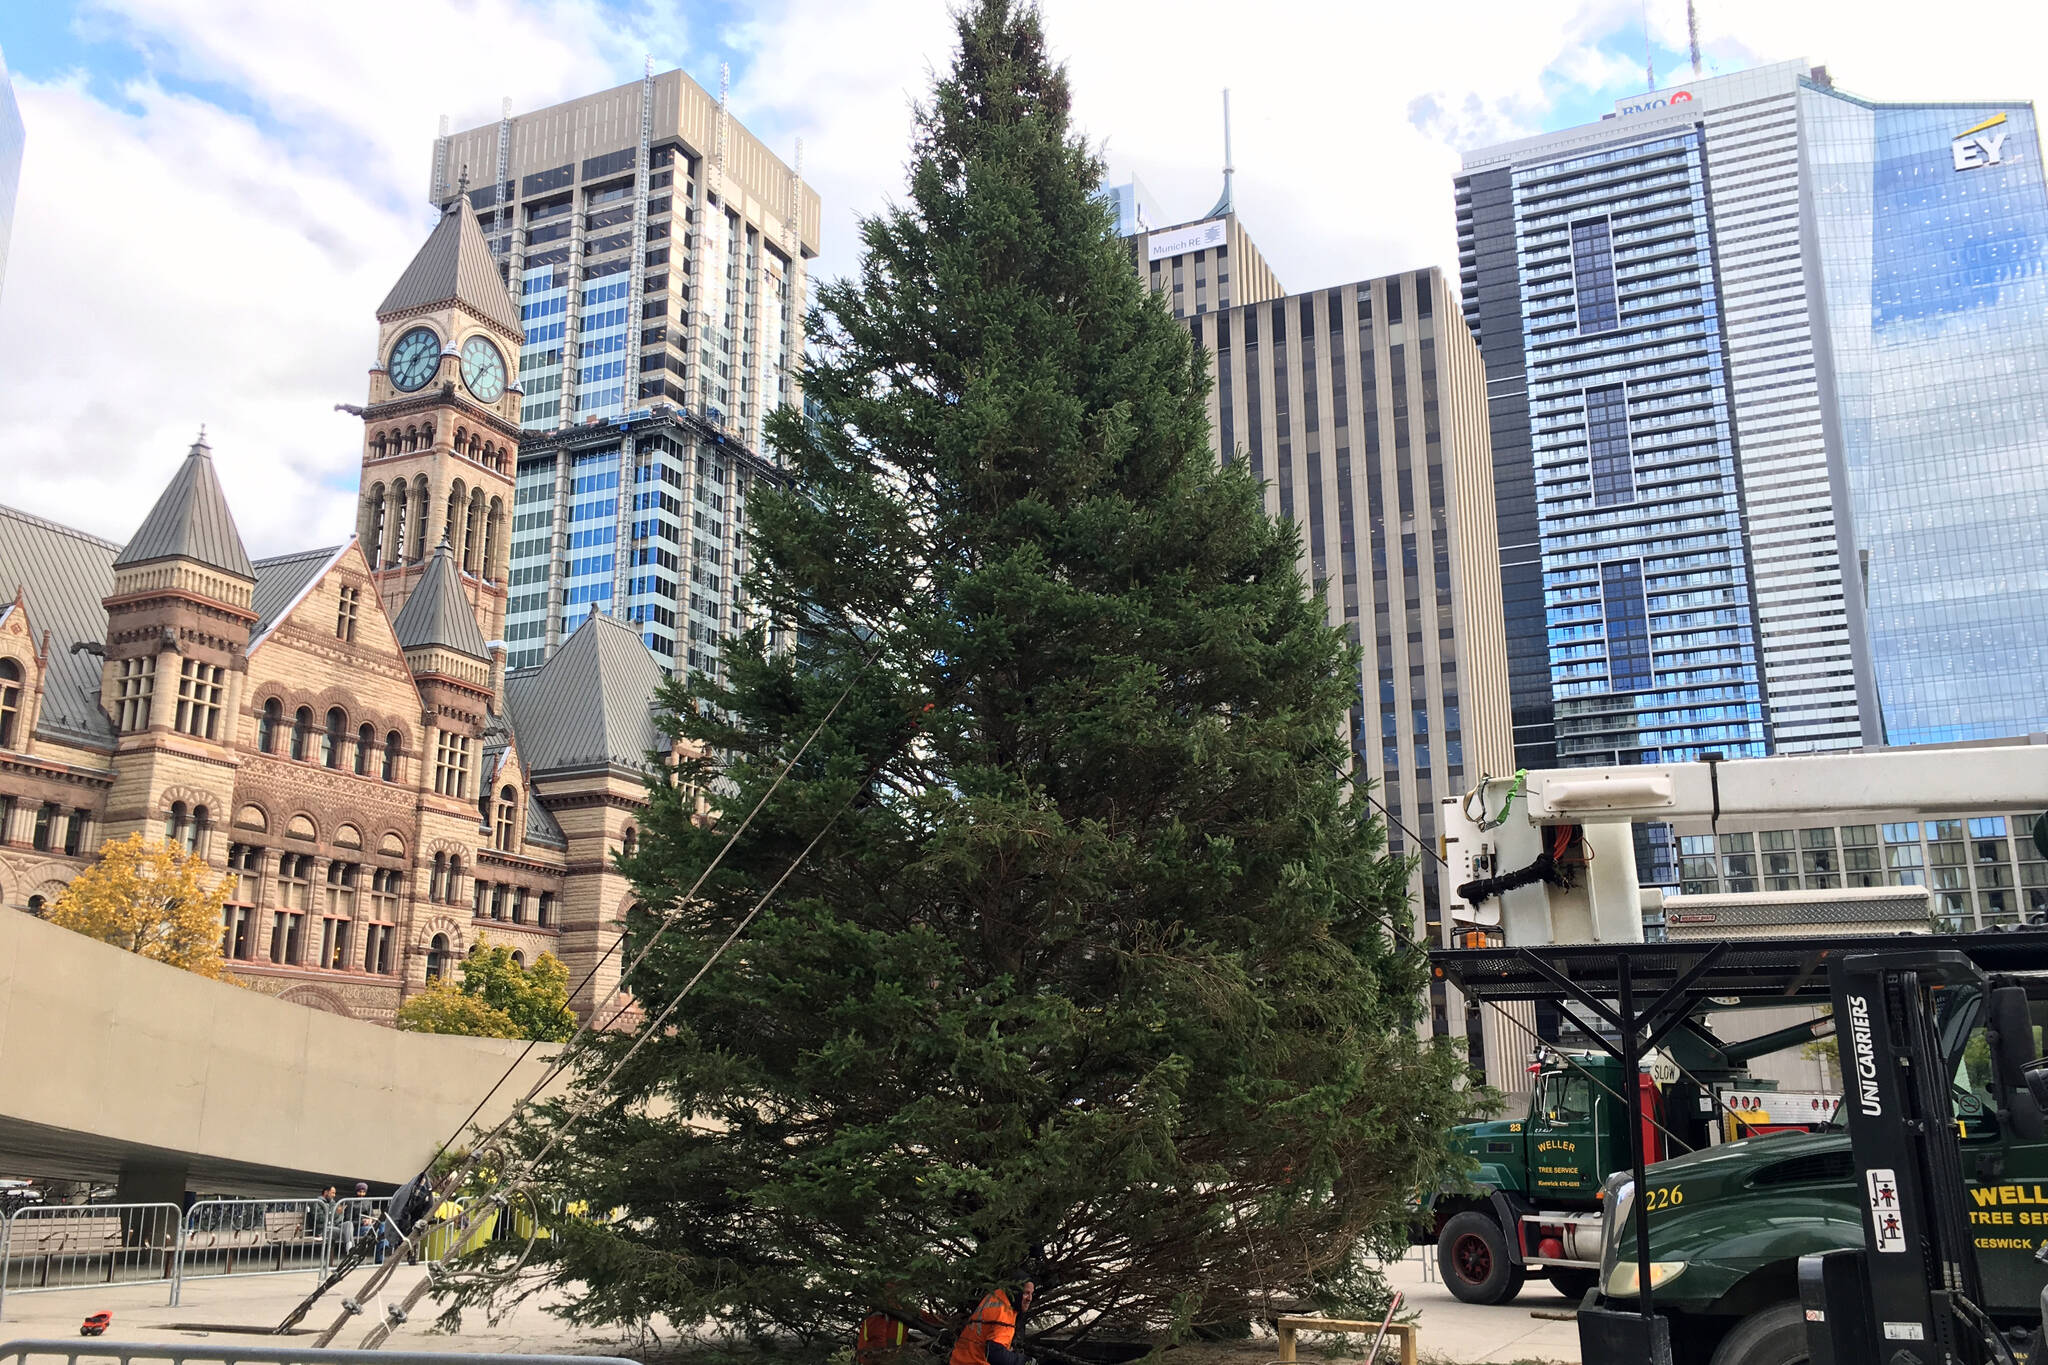 Toronto's giant Christmas tree has arrived at city hall